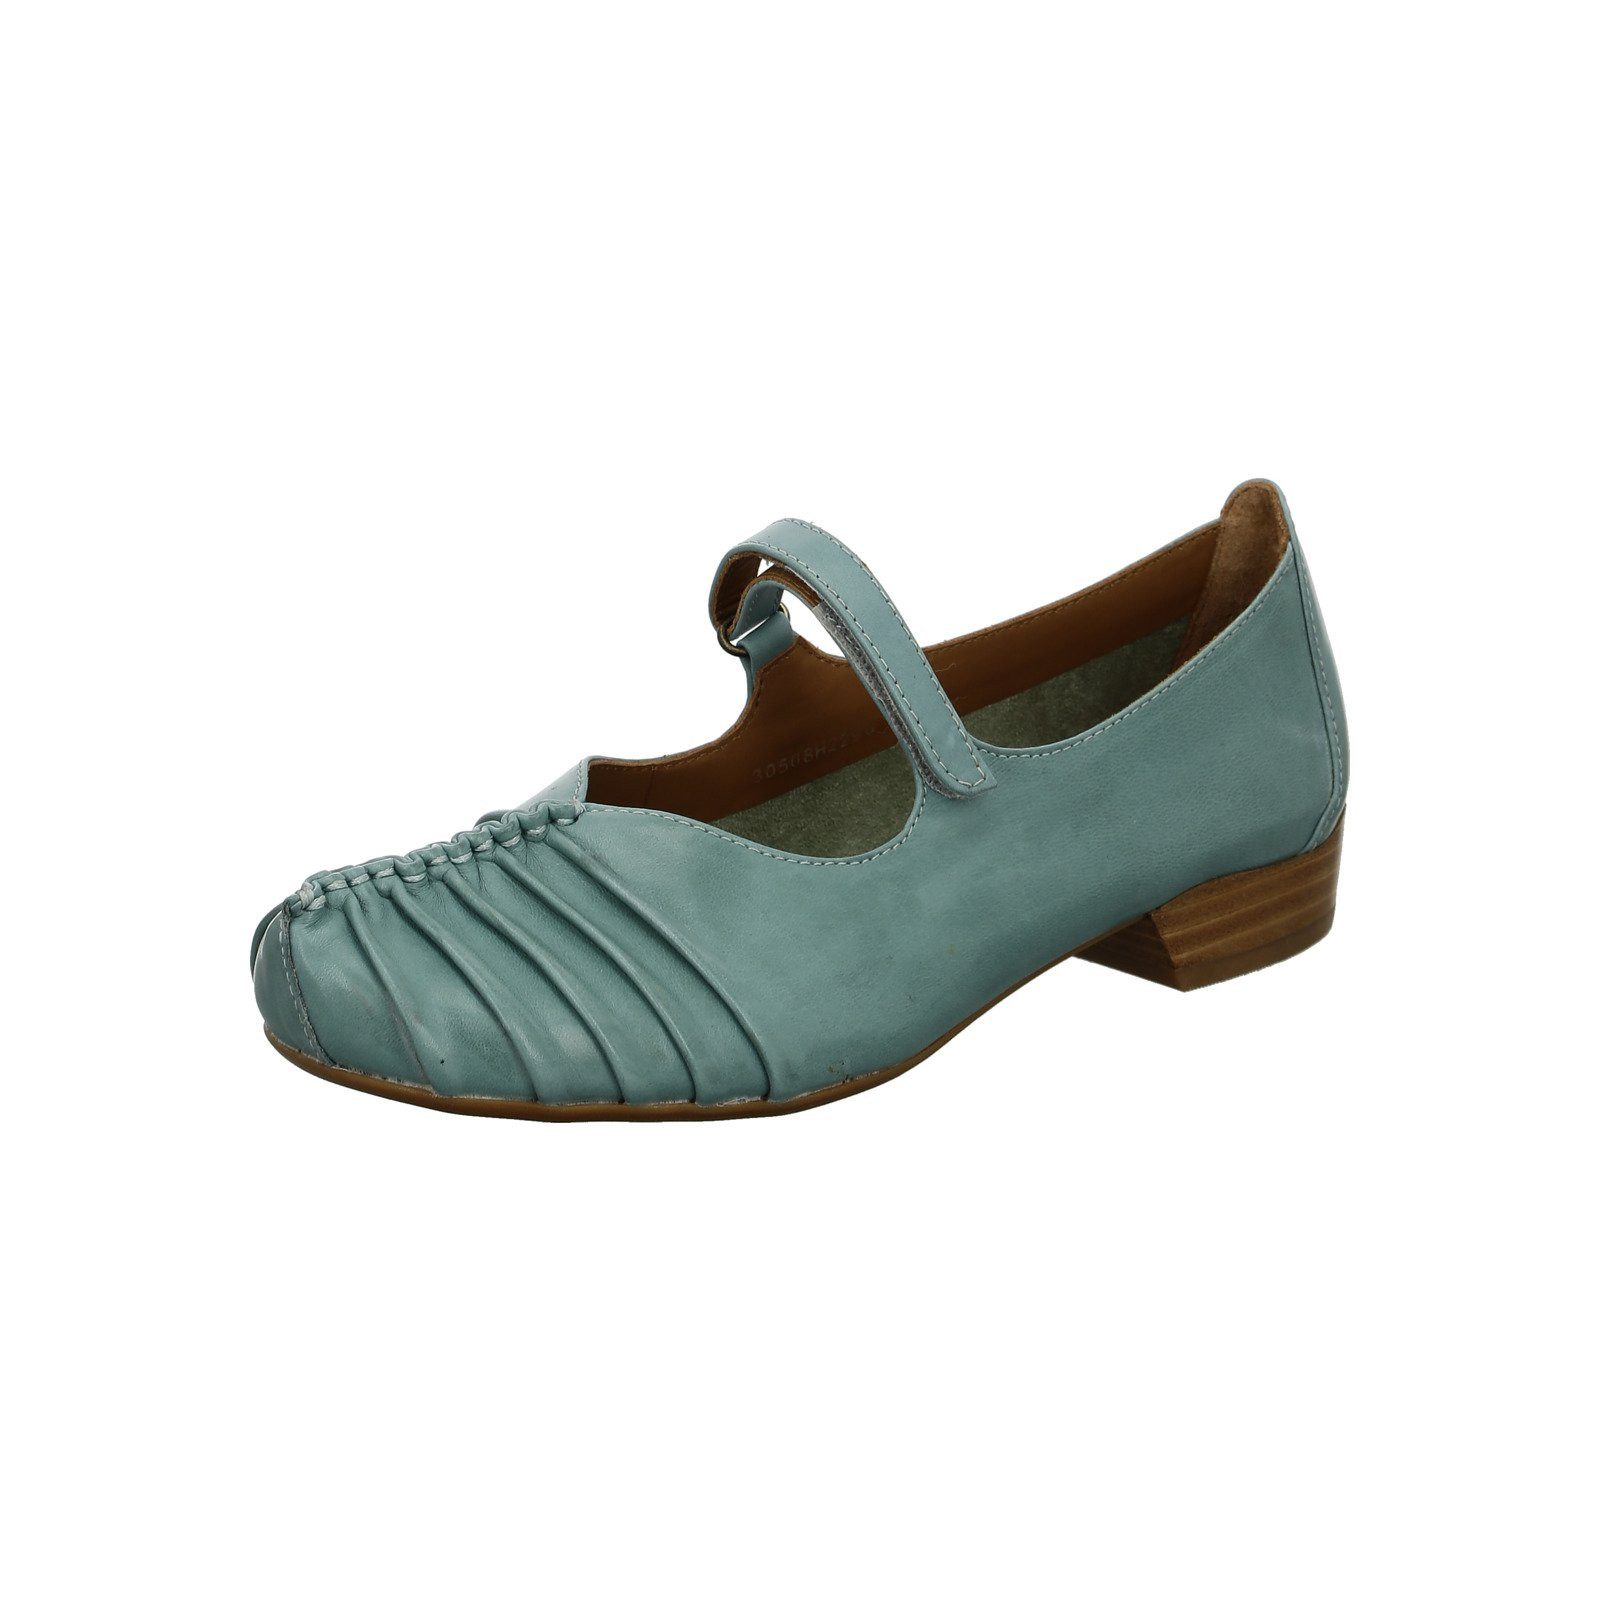 Everybody Galega - Damen Schuhe Pumps Ballerina Glattleder grün